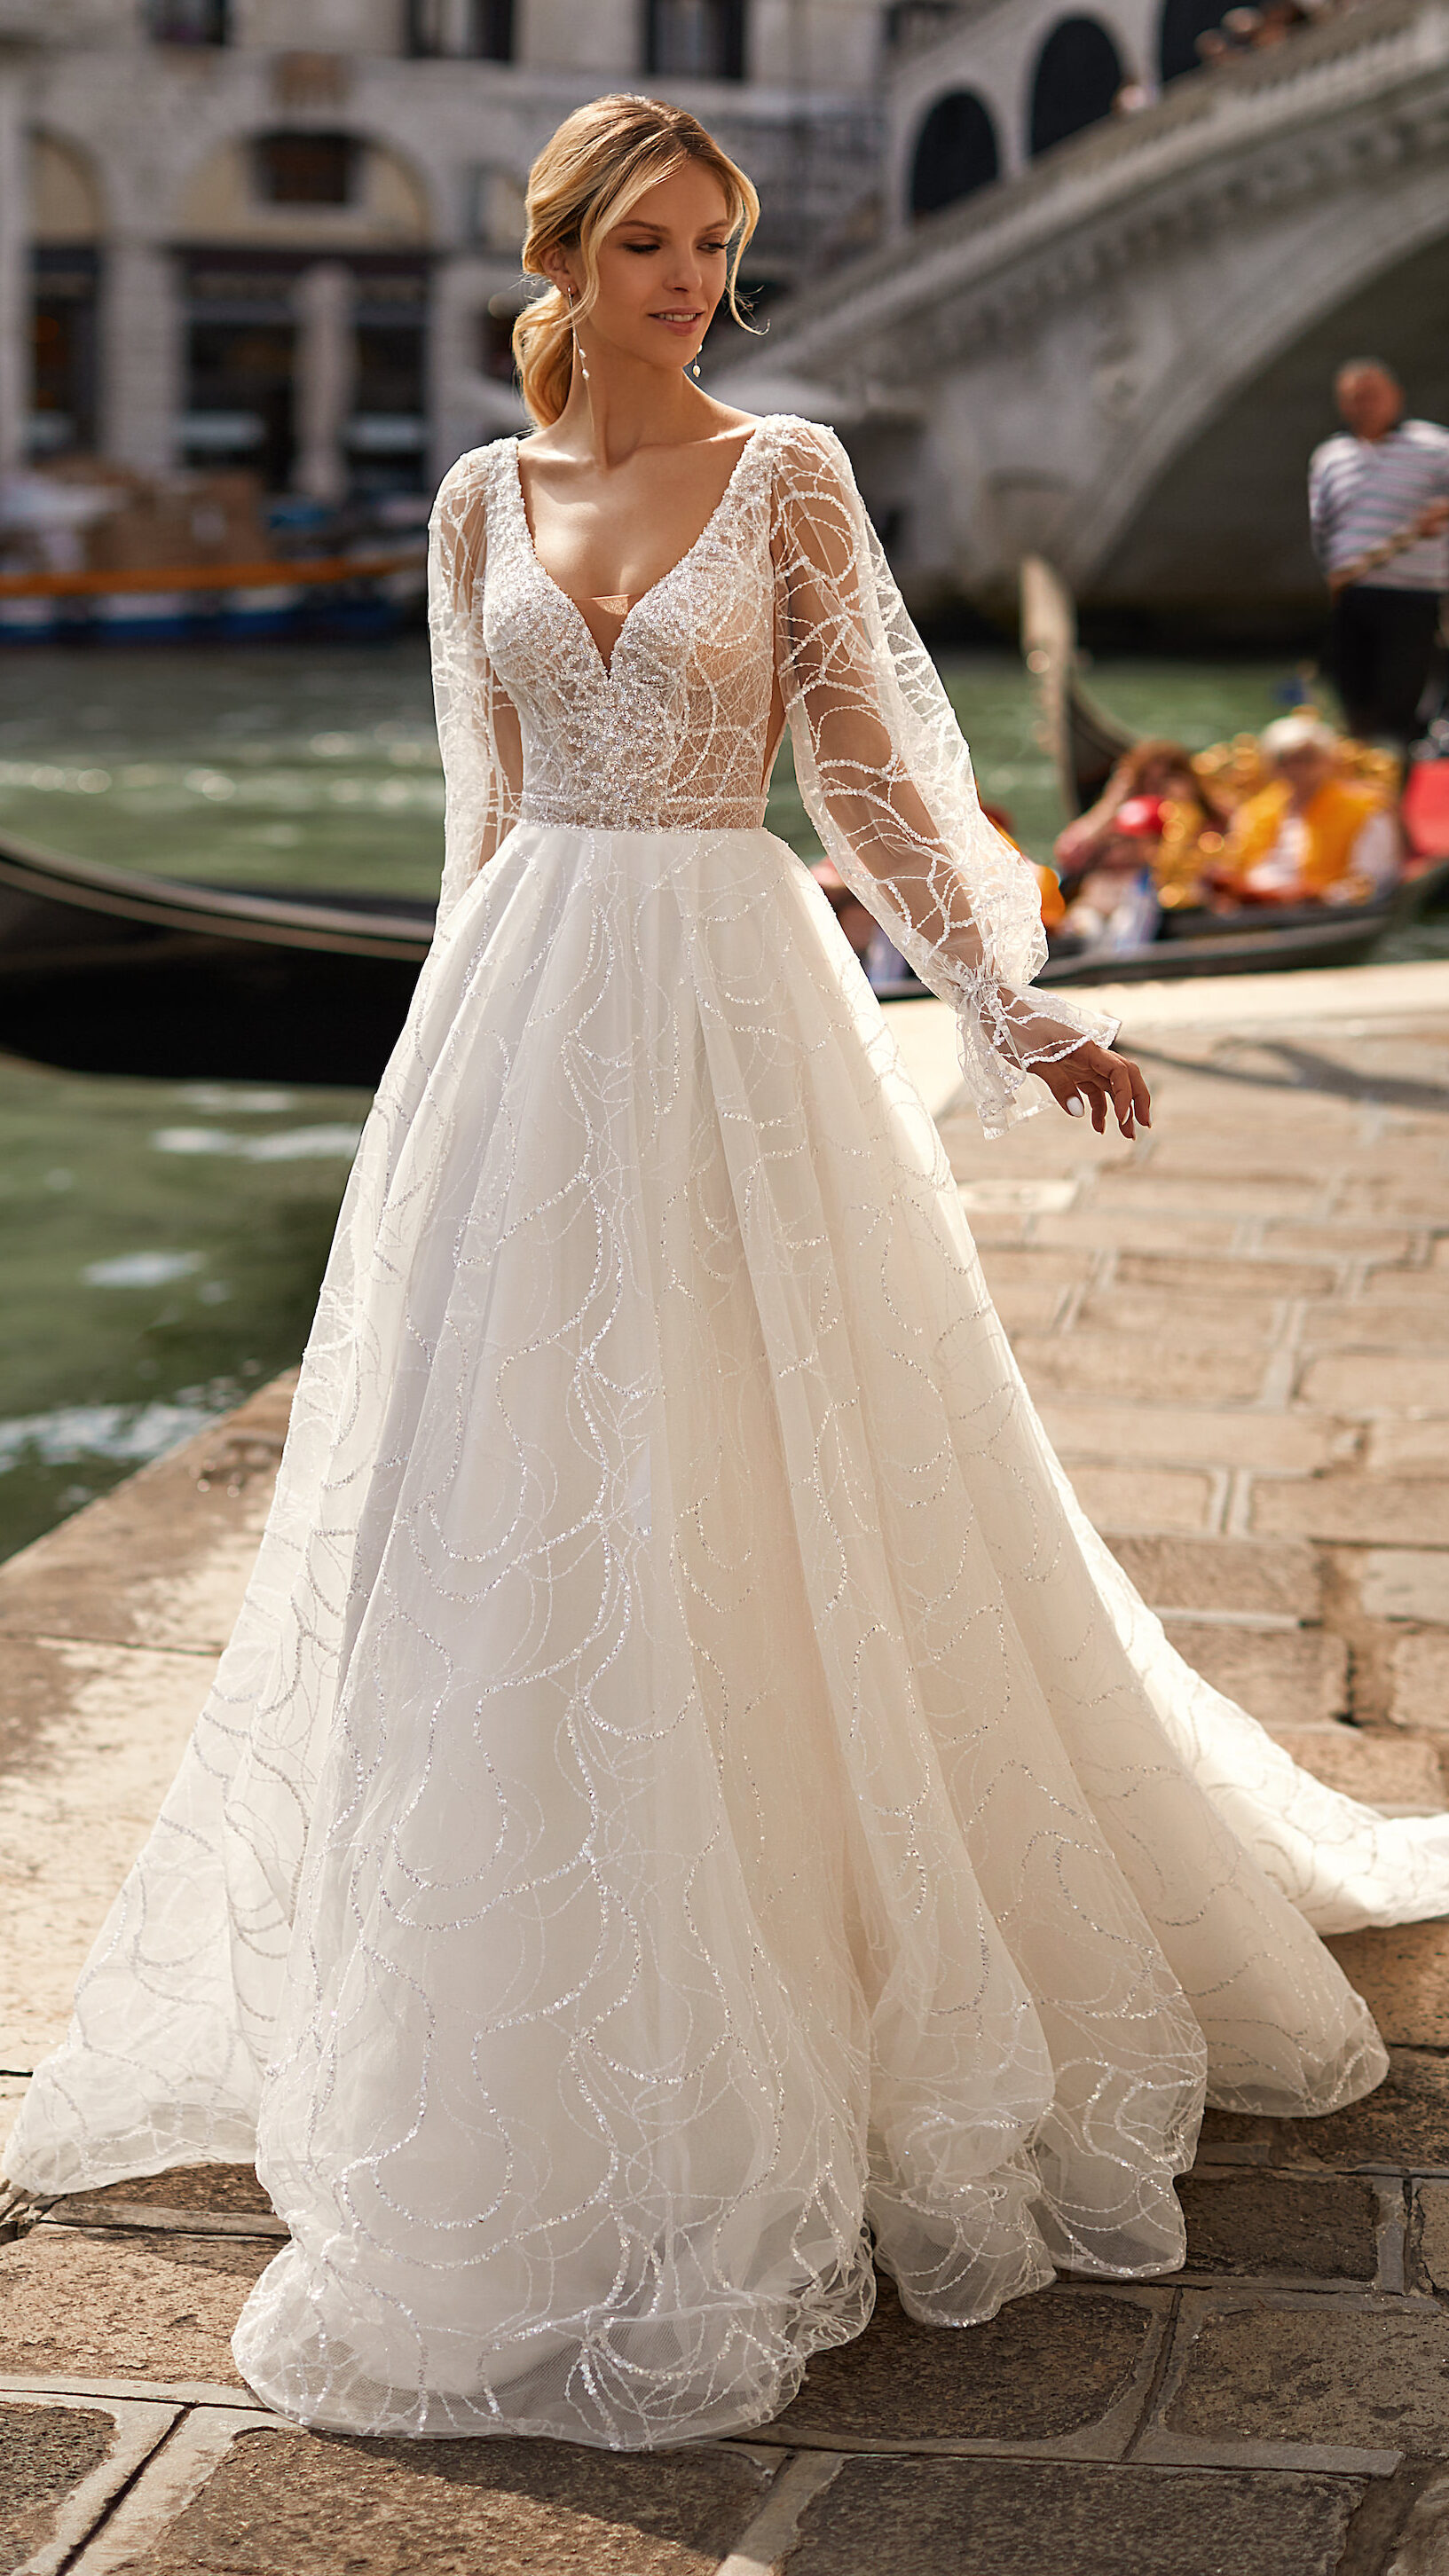 Laura by Katy Corso wedding dress